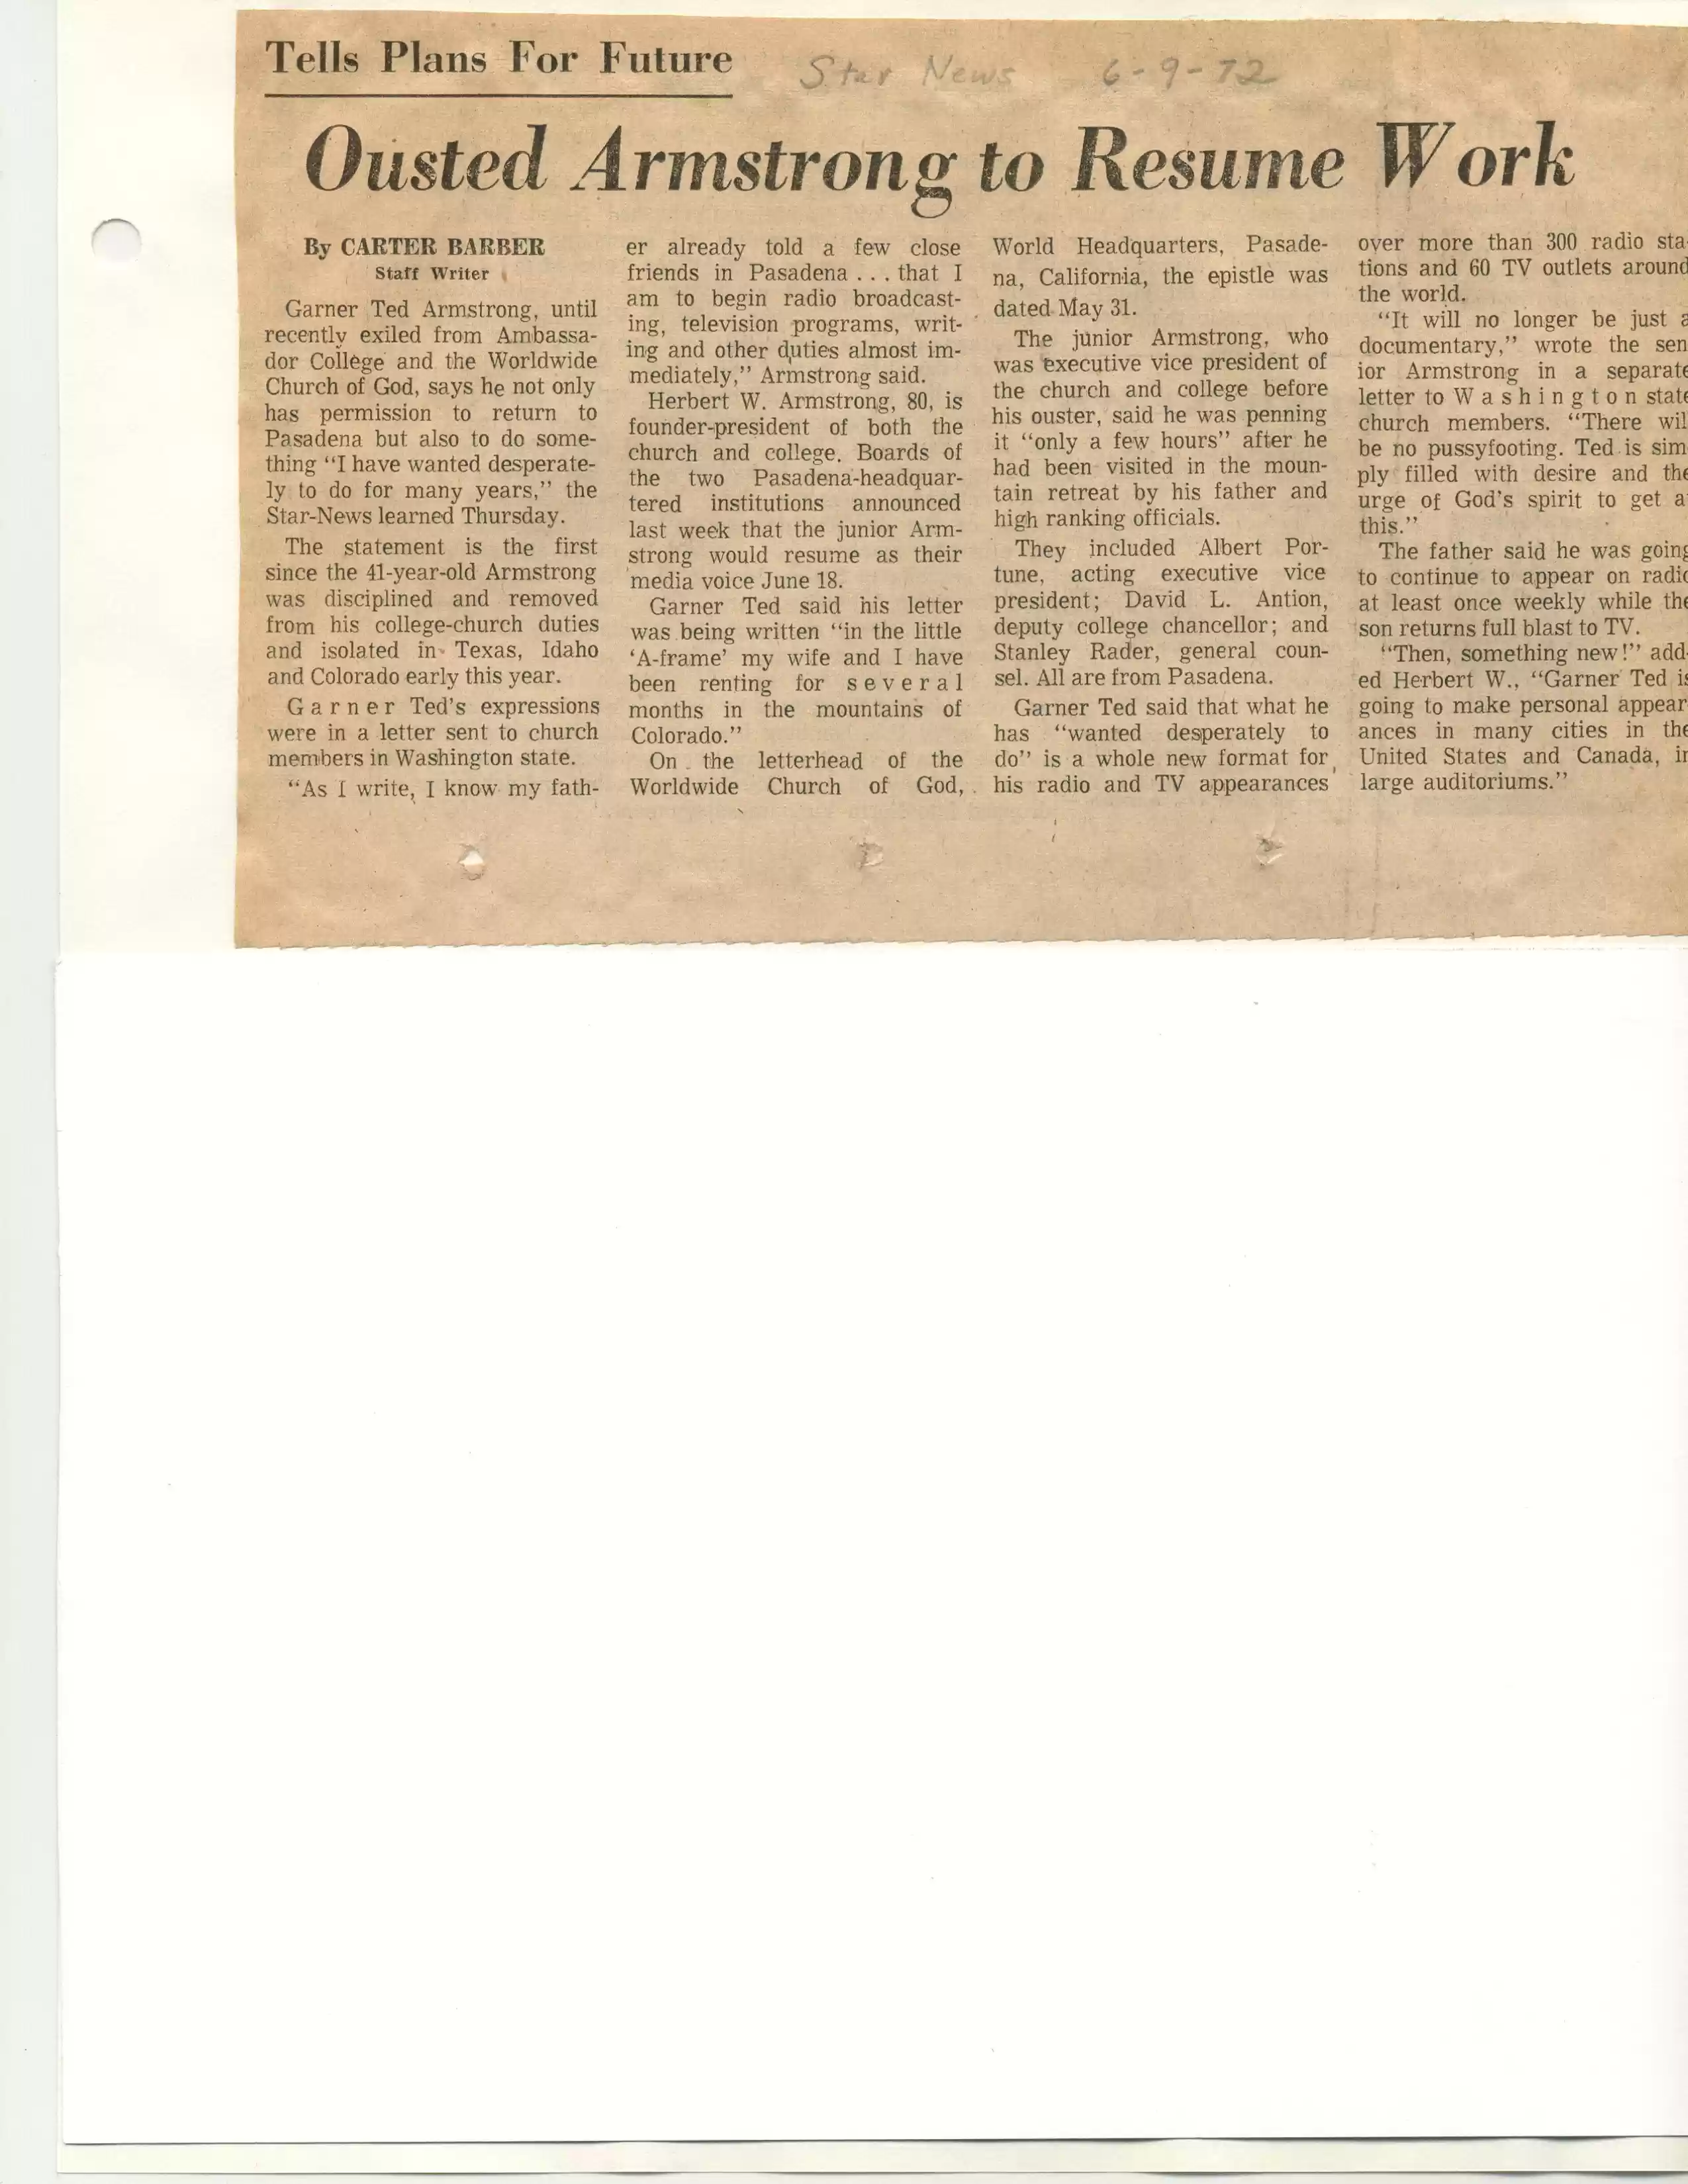 Pasadena Star News, 6-9-72